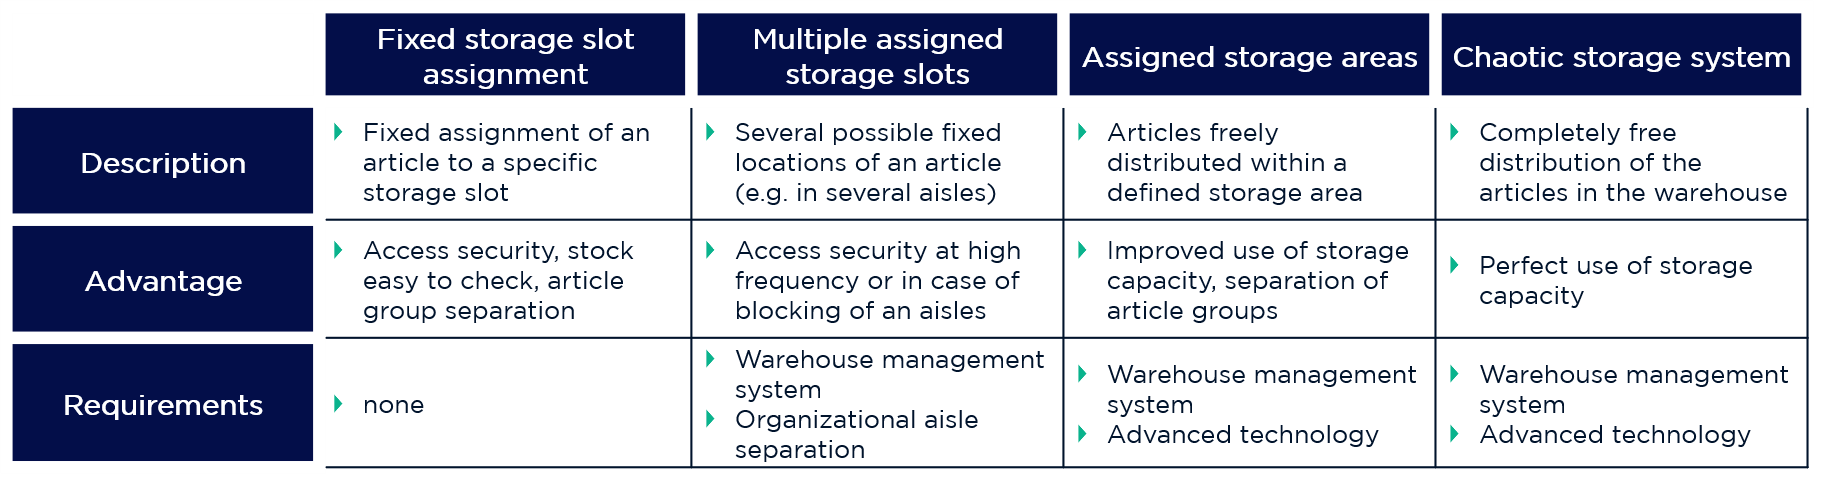 4 storage location allocation philosophies